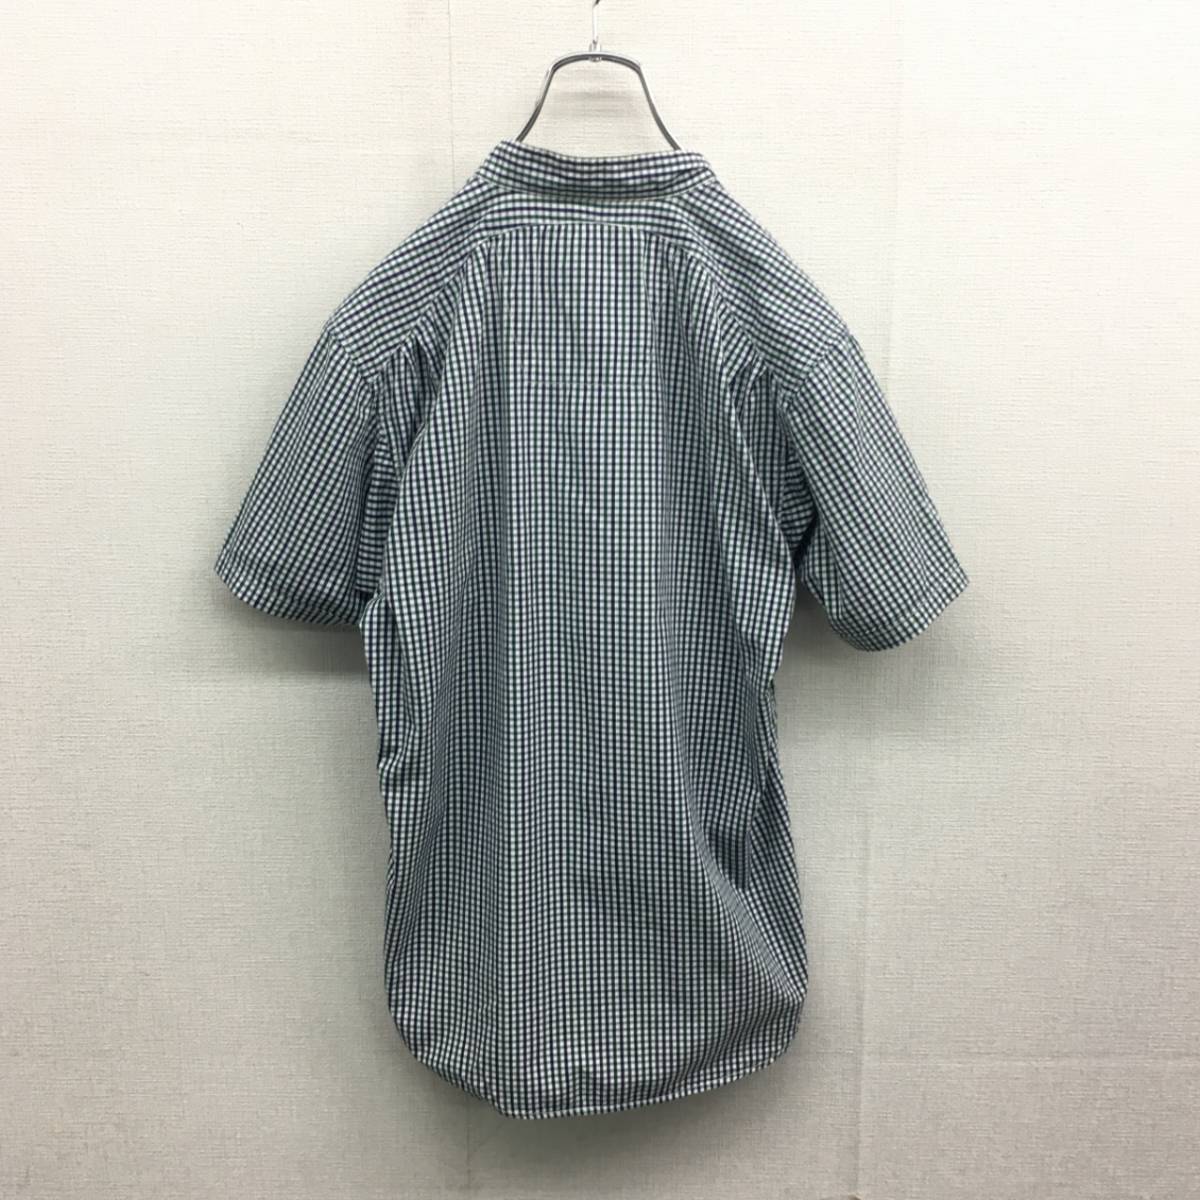 KZ3041*nonnative band color short sleeves western shirt *0* green / blue check pattern Nonnative 